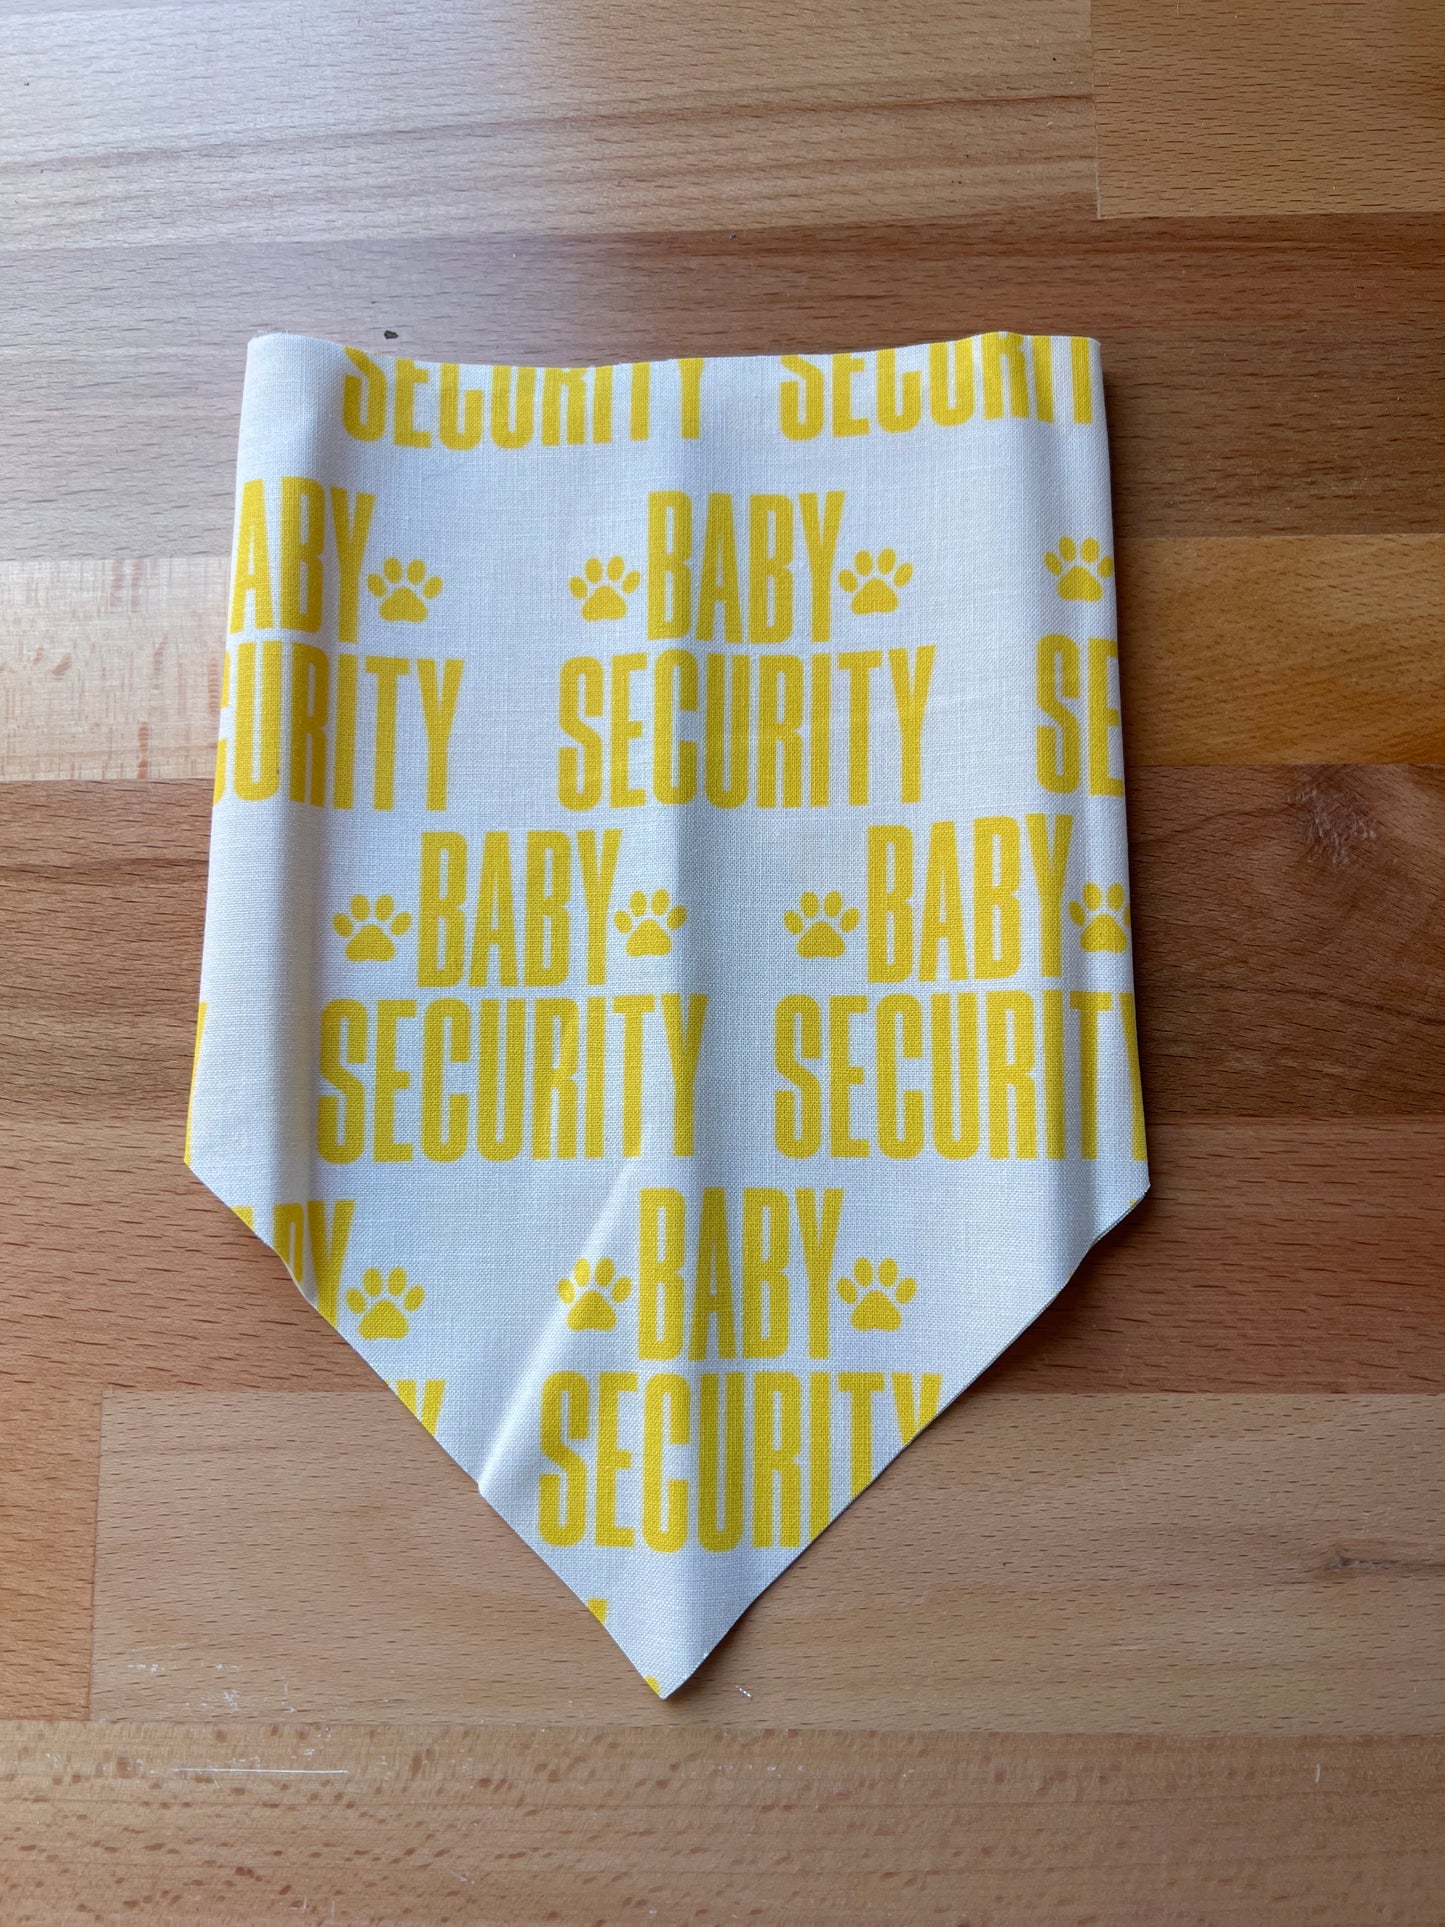 Baby Security Bandana